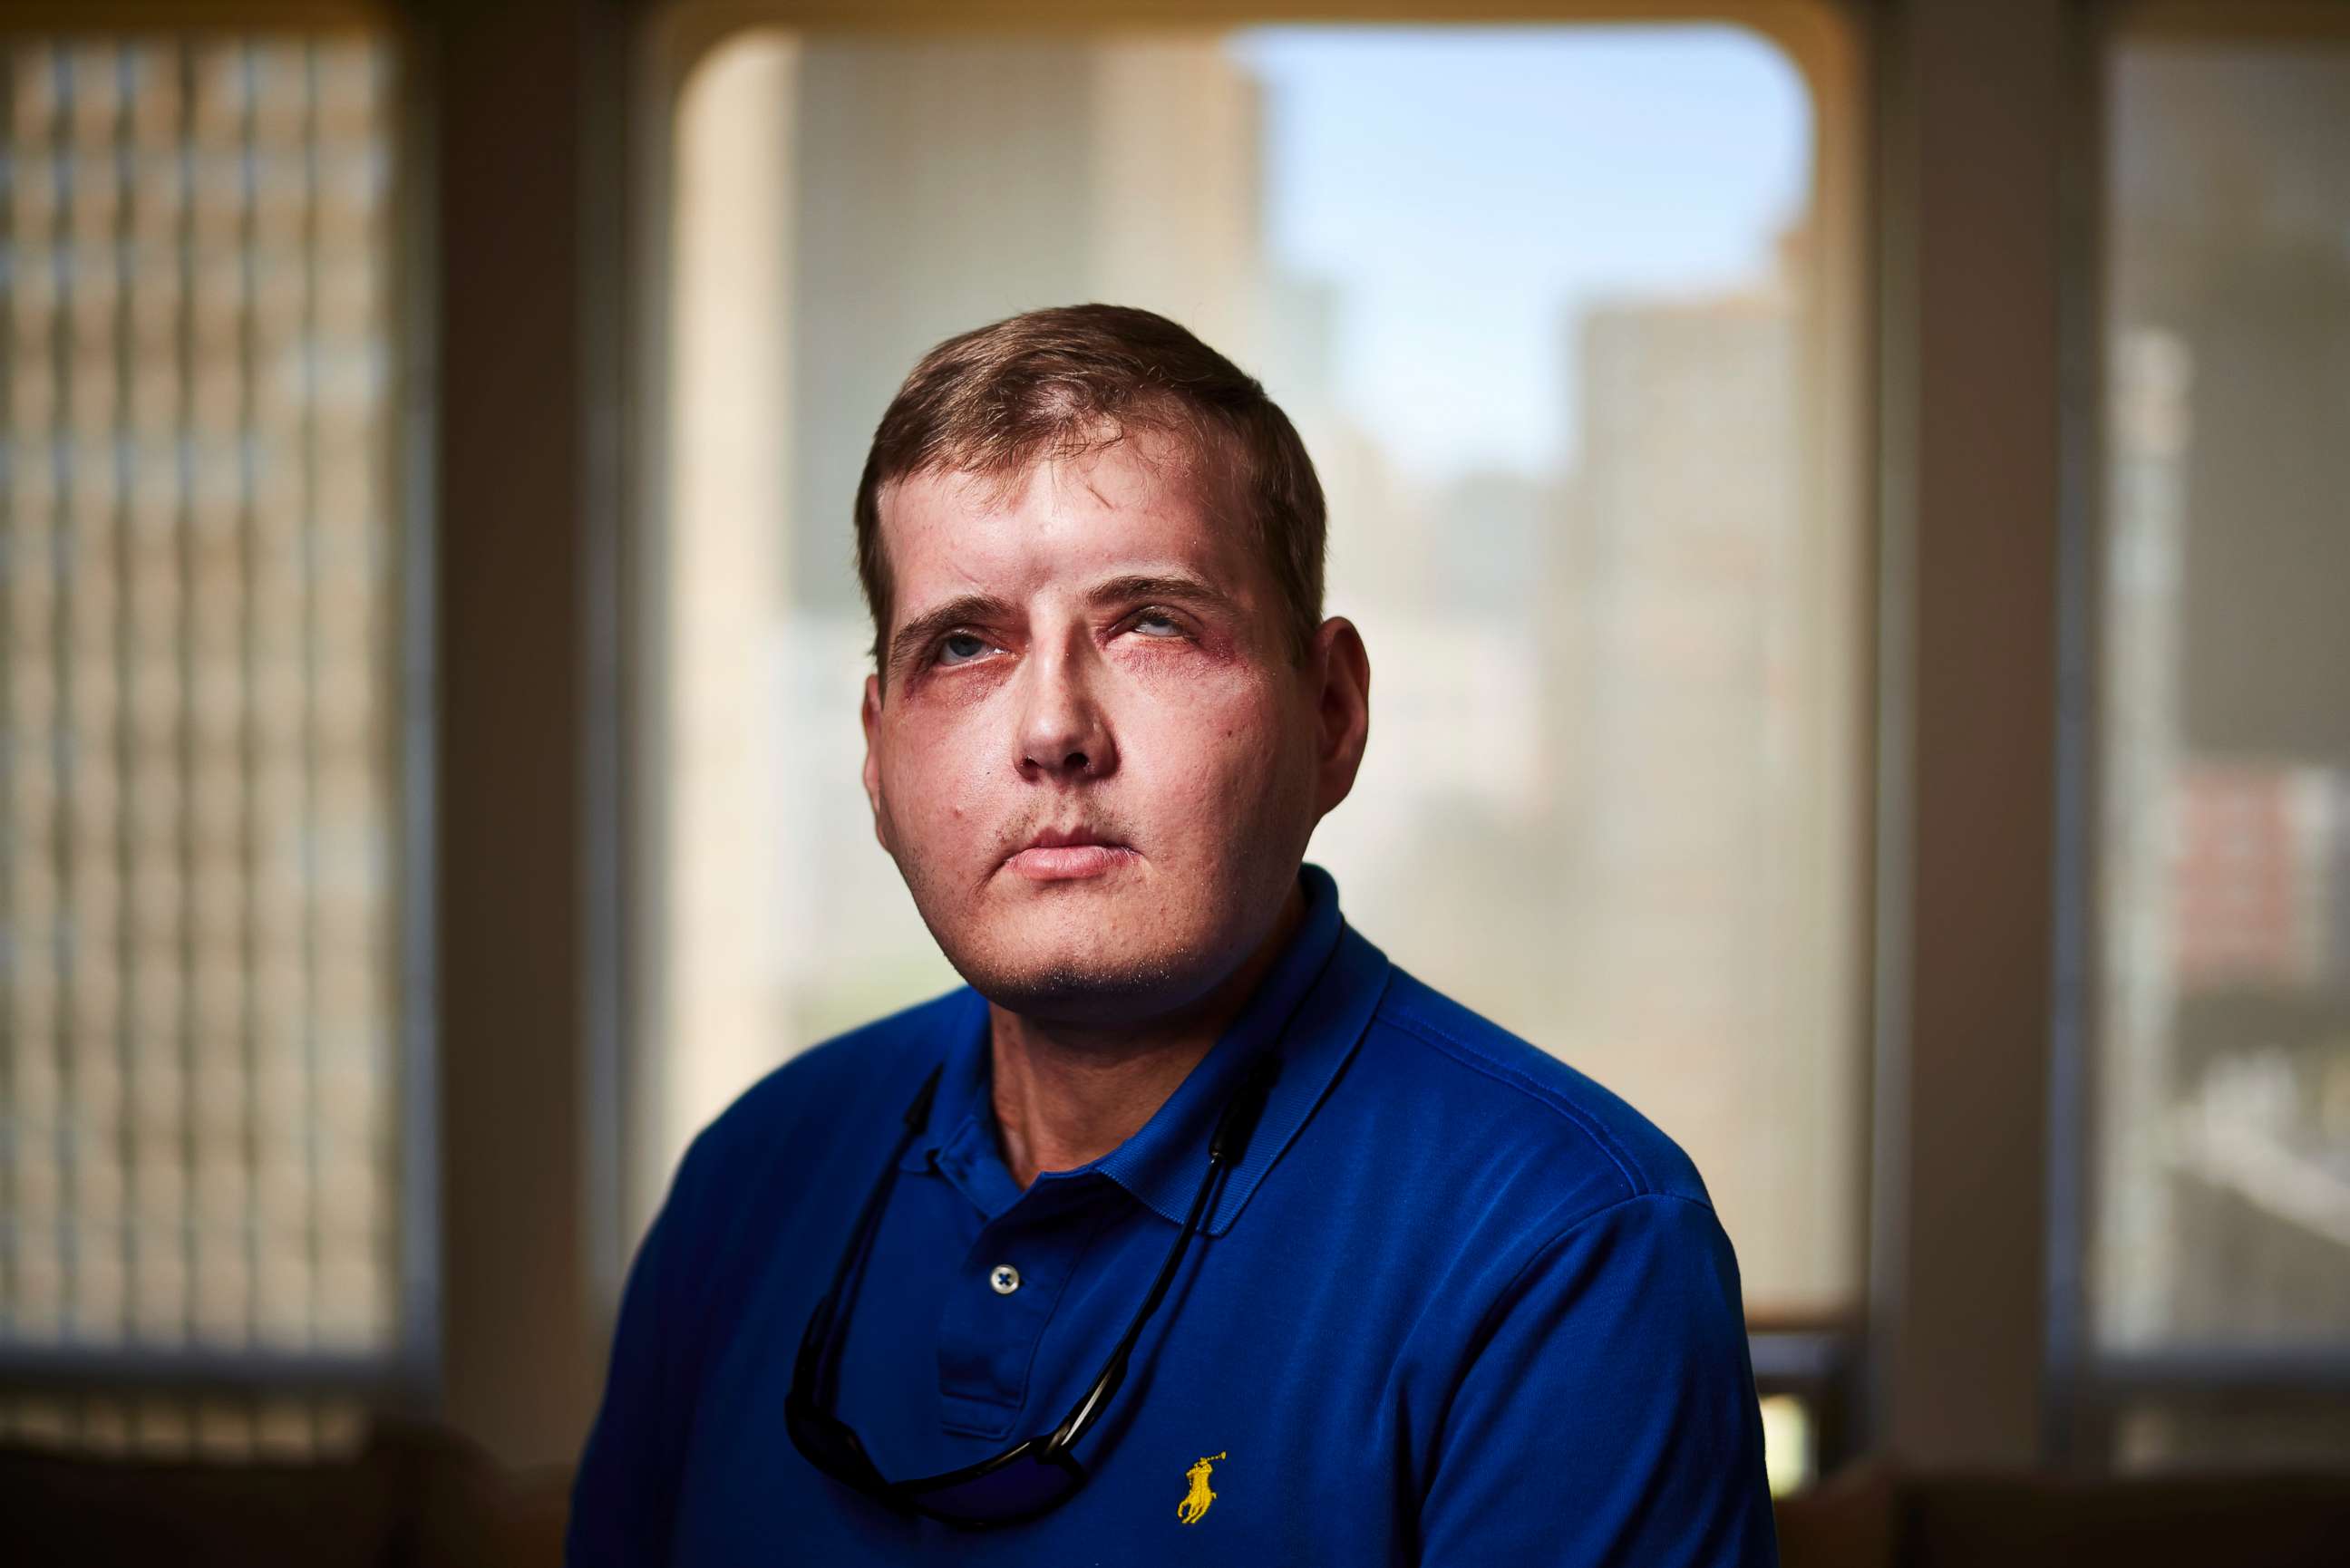 Patrick Hardison Picture Groundbreaking facial transplants ABC News